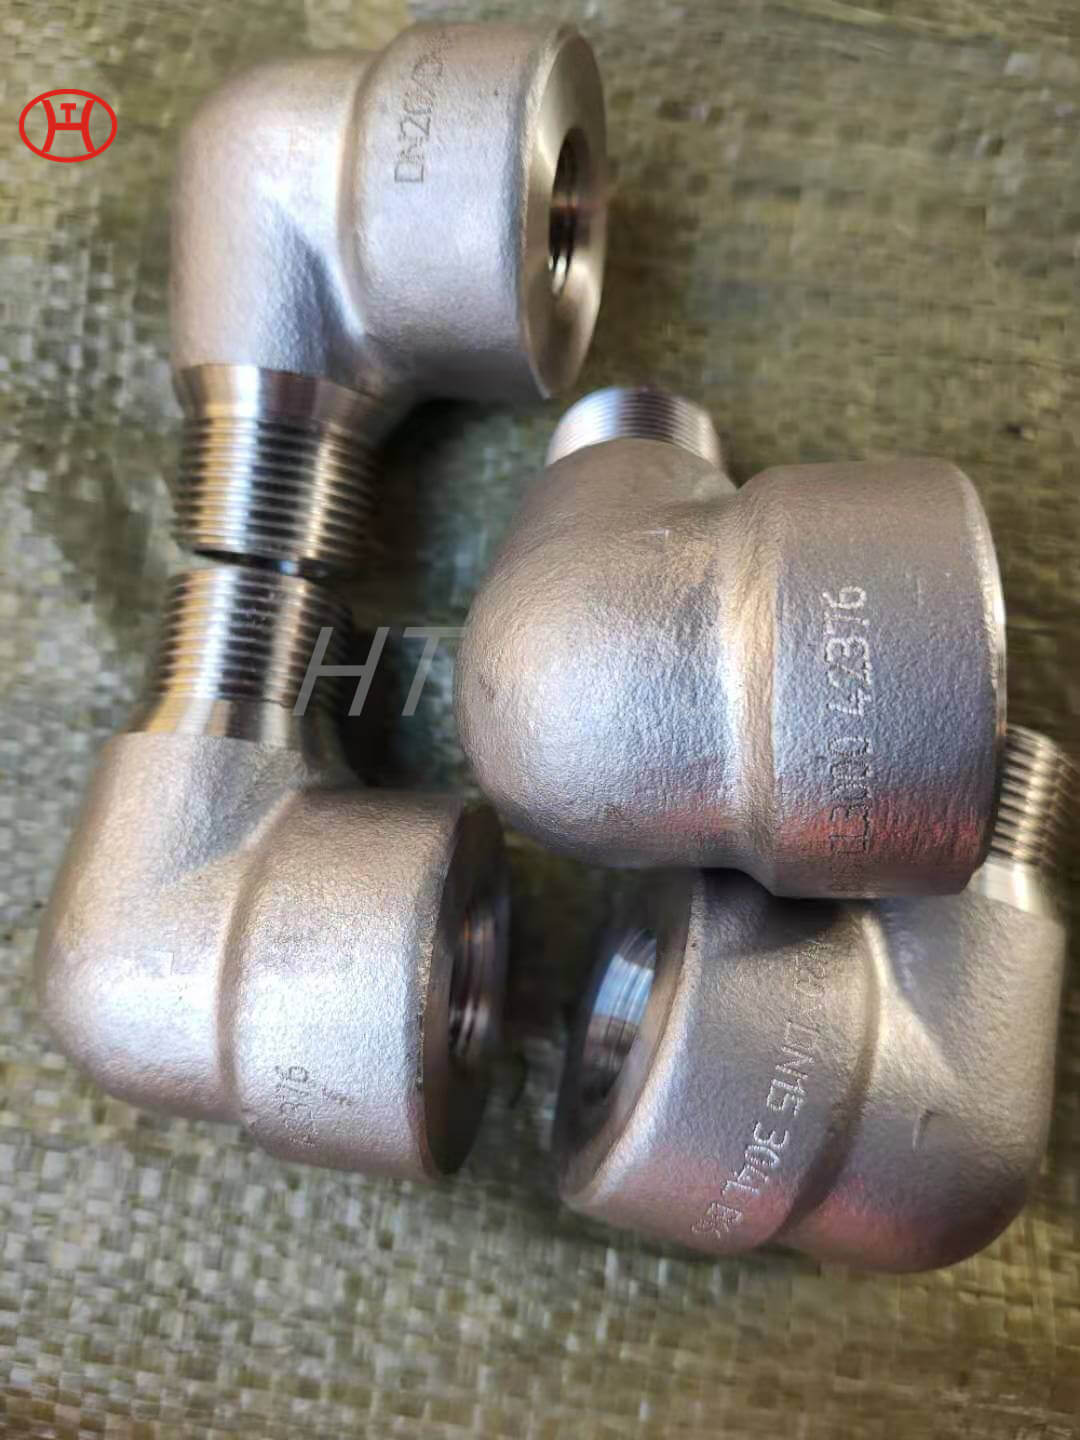 stainless steel 316 welded pipe fittings elbow